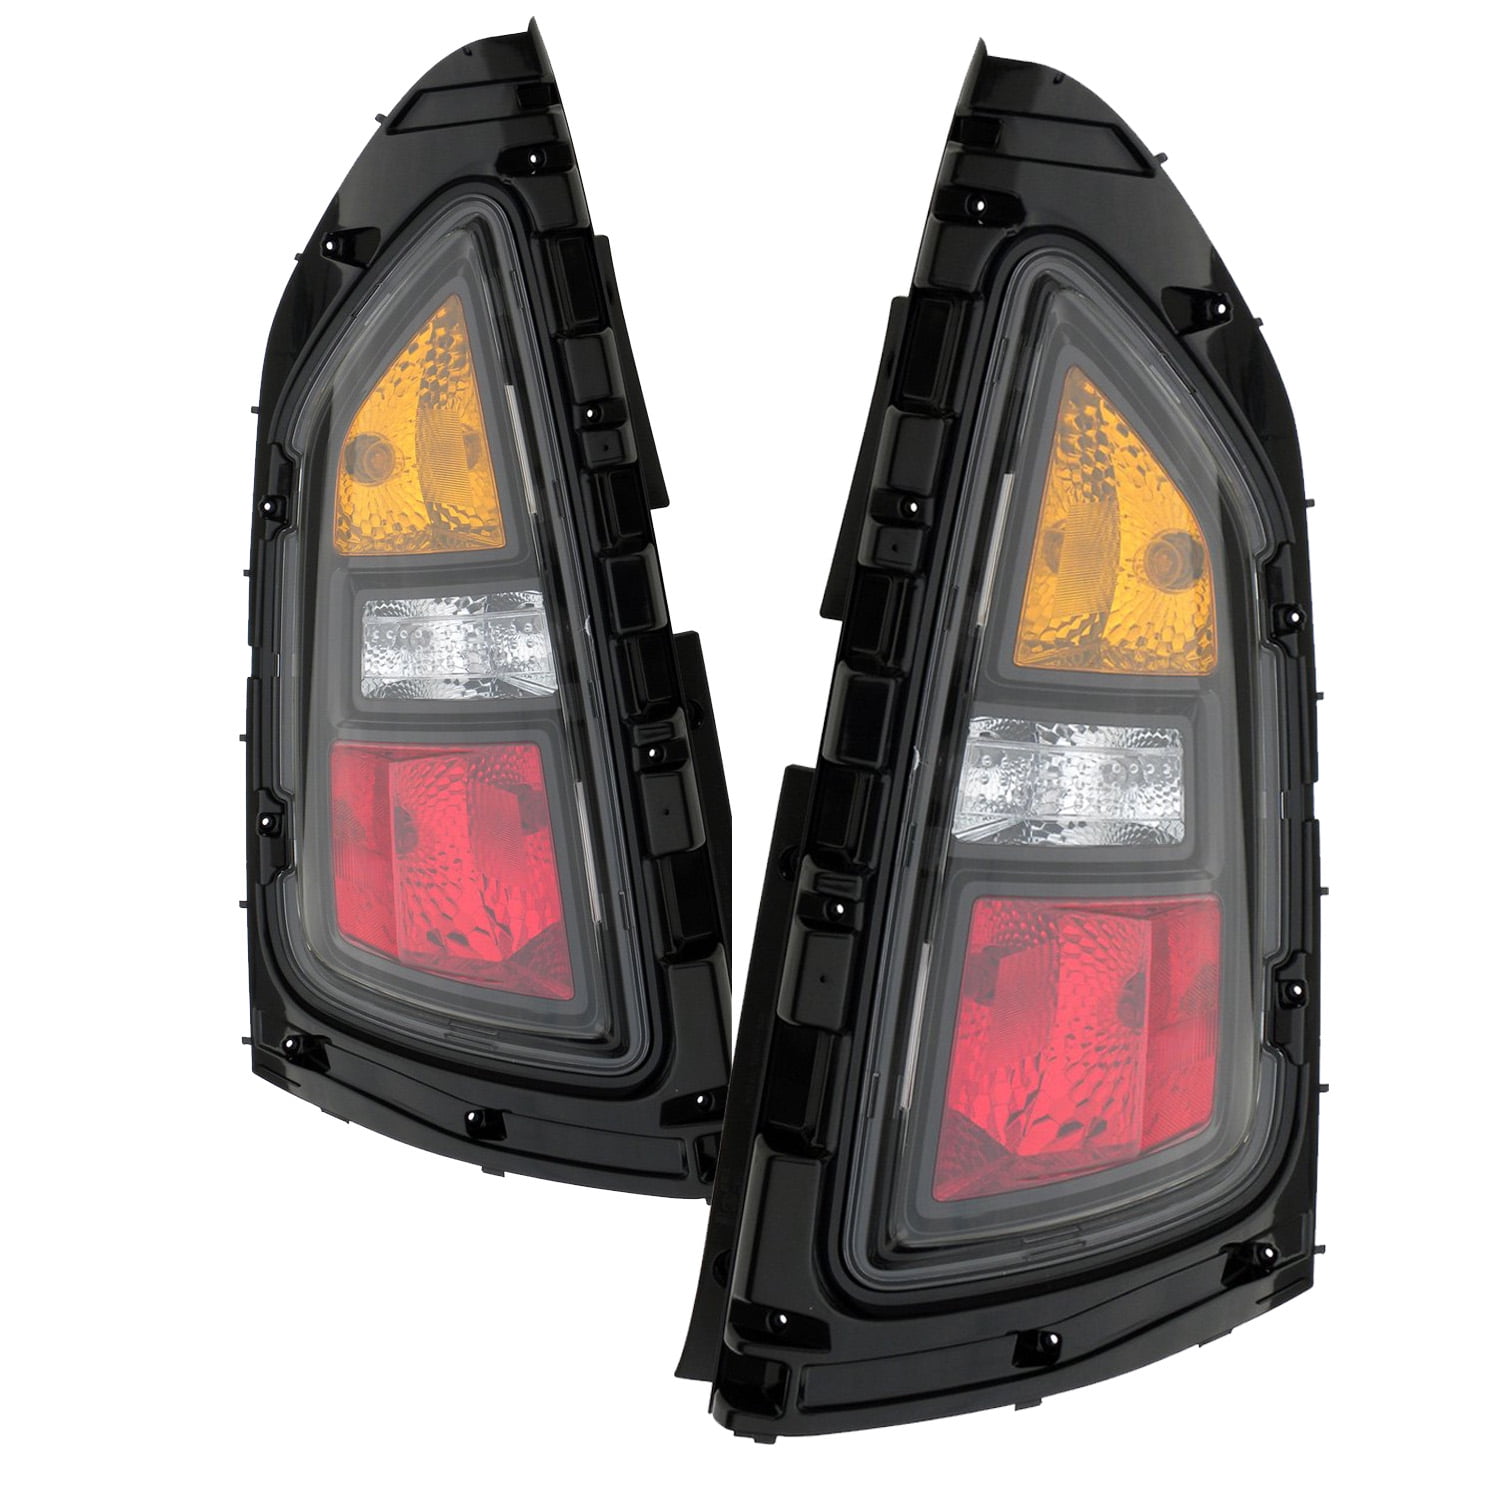 Rareelectrical NEW DRIVER SIDE REFLECTOR LIGHT COMPATIBLE WITH KIA SOUL 2.0L 2012-13 92451 2K500 92451-2K500 924512K500 KI2830100 